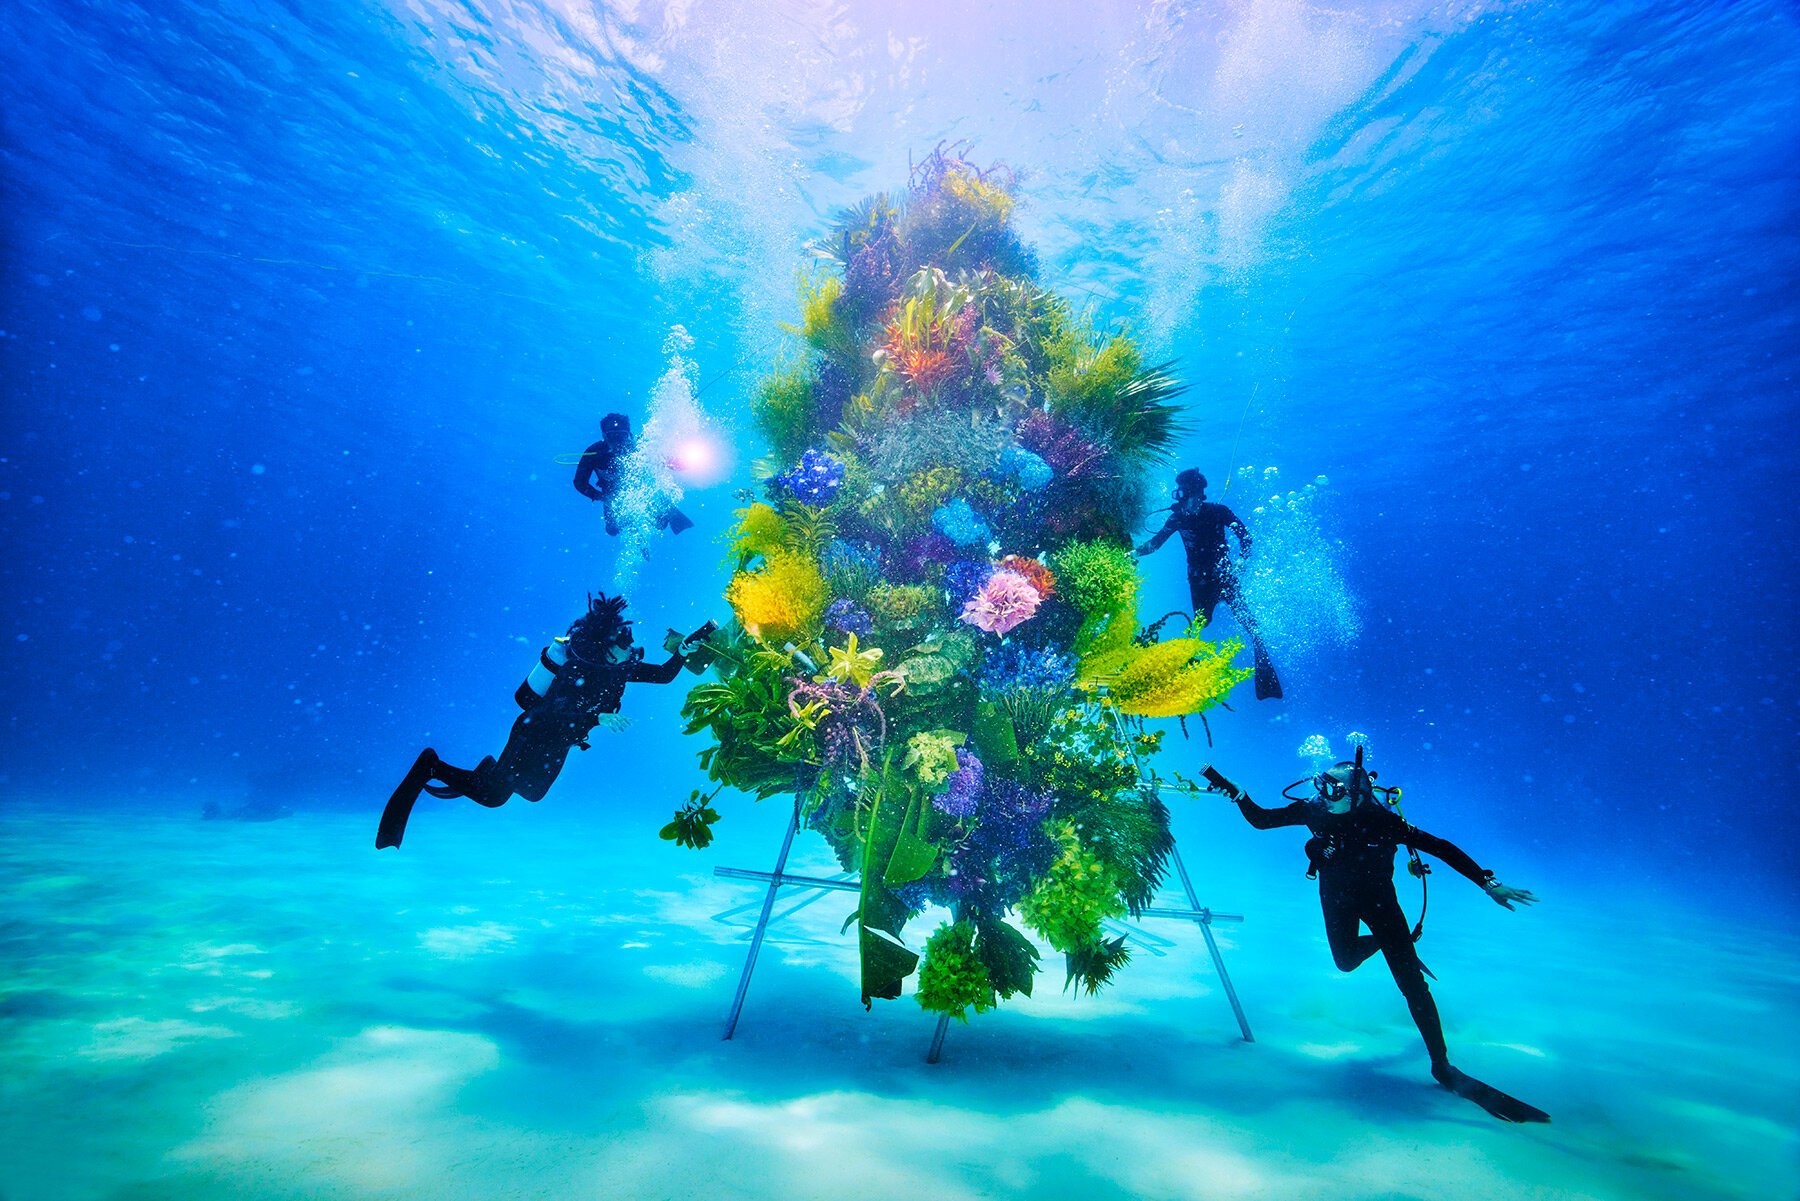 azuma-makoto-submerges-intricate-botanical-sculpture-blue-waters-japan-designboom-full-01.jpg